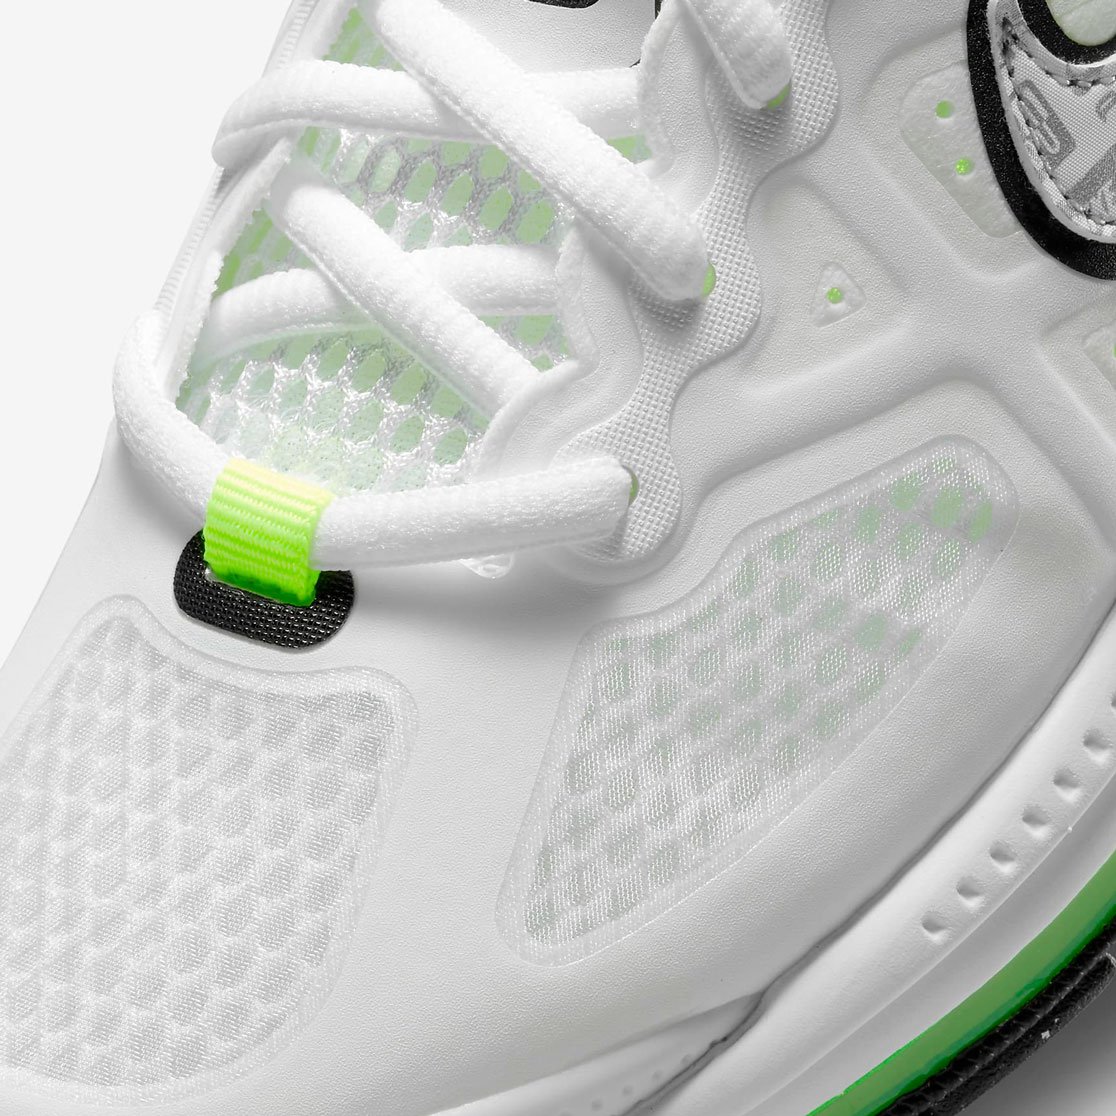 Кроссовки десткие Nike Air Max Genome